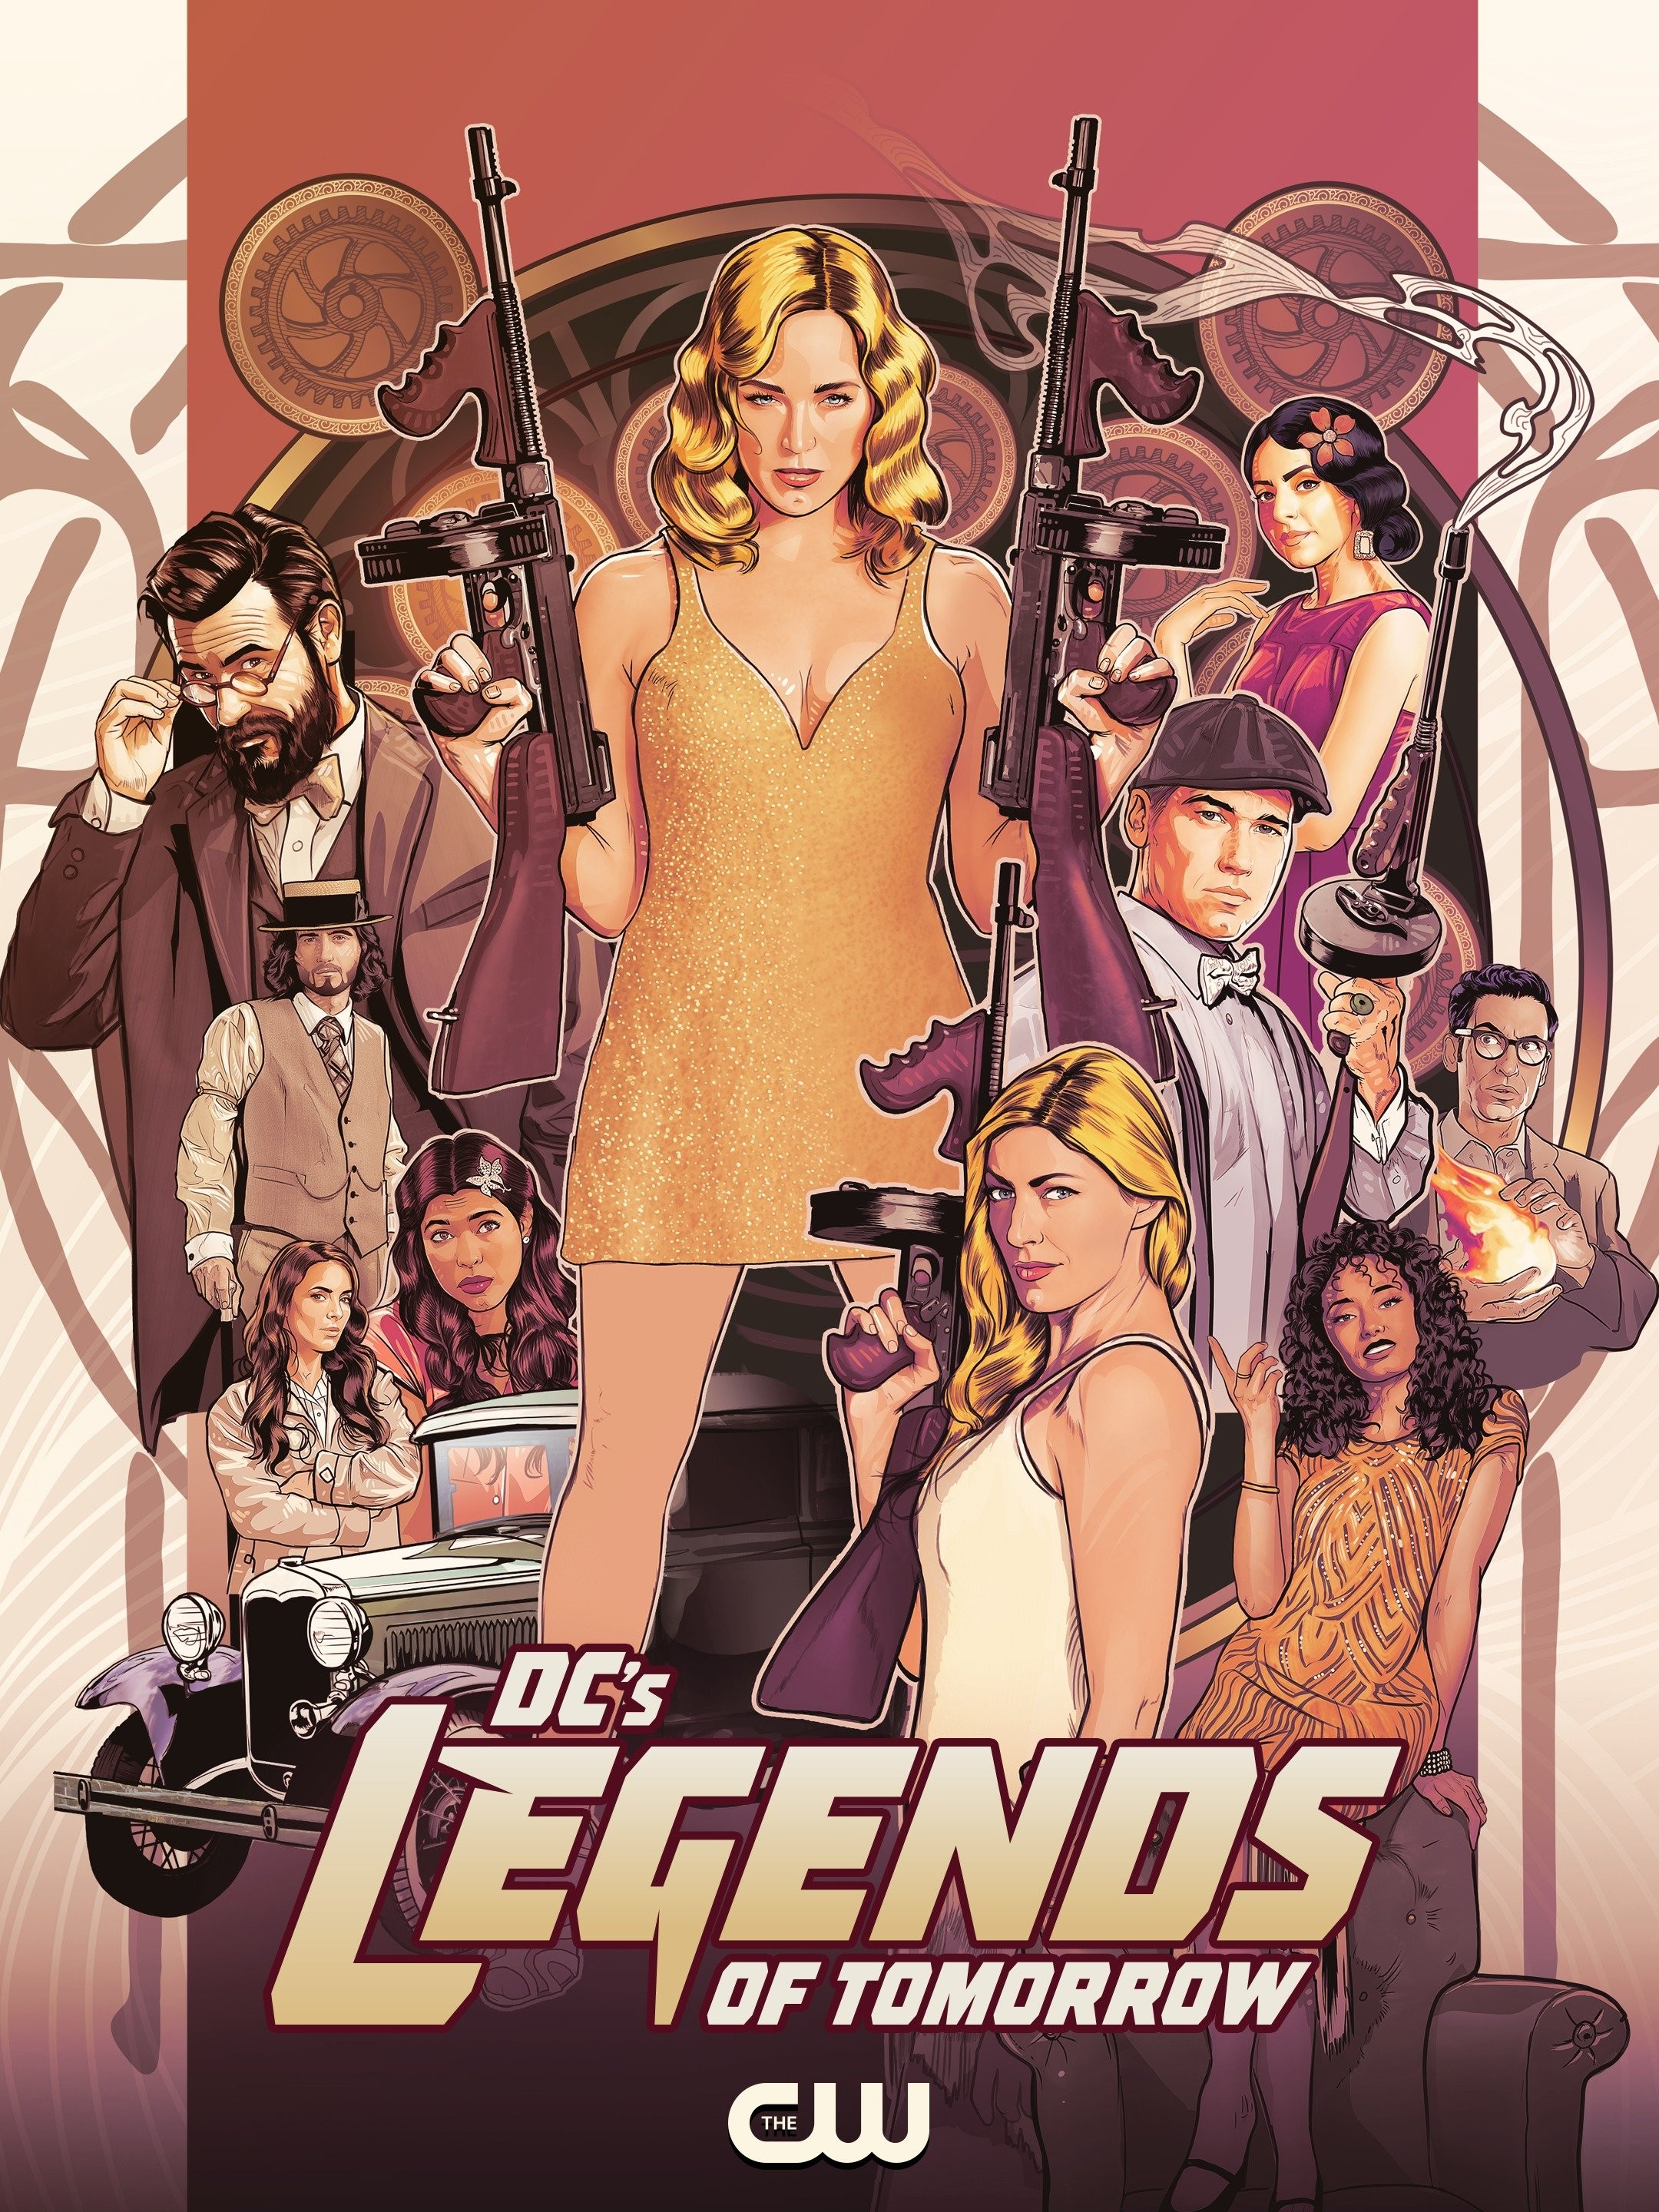 Legends of Tomorrow Season 5, Episode 3 Review - Final Girls